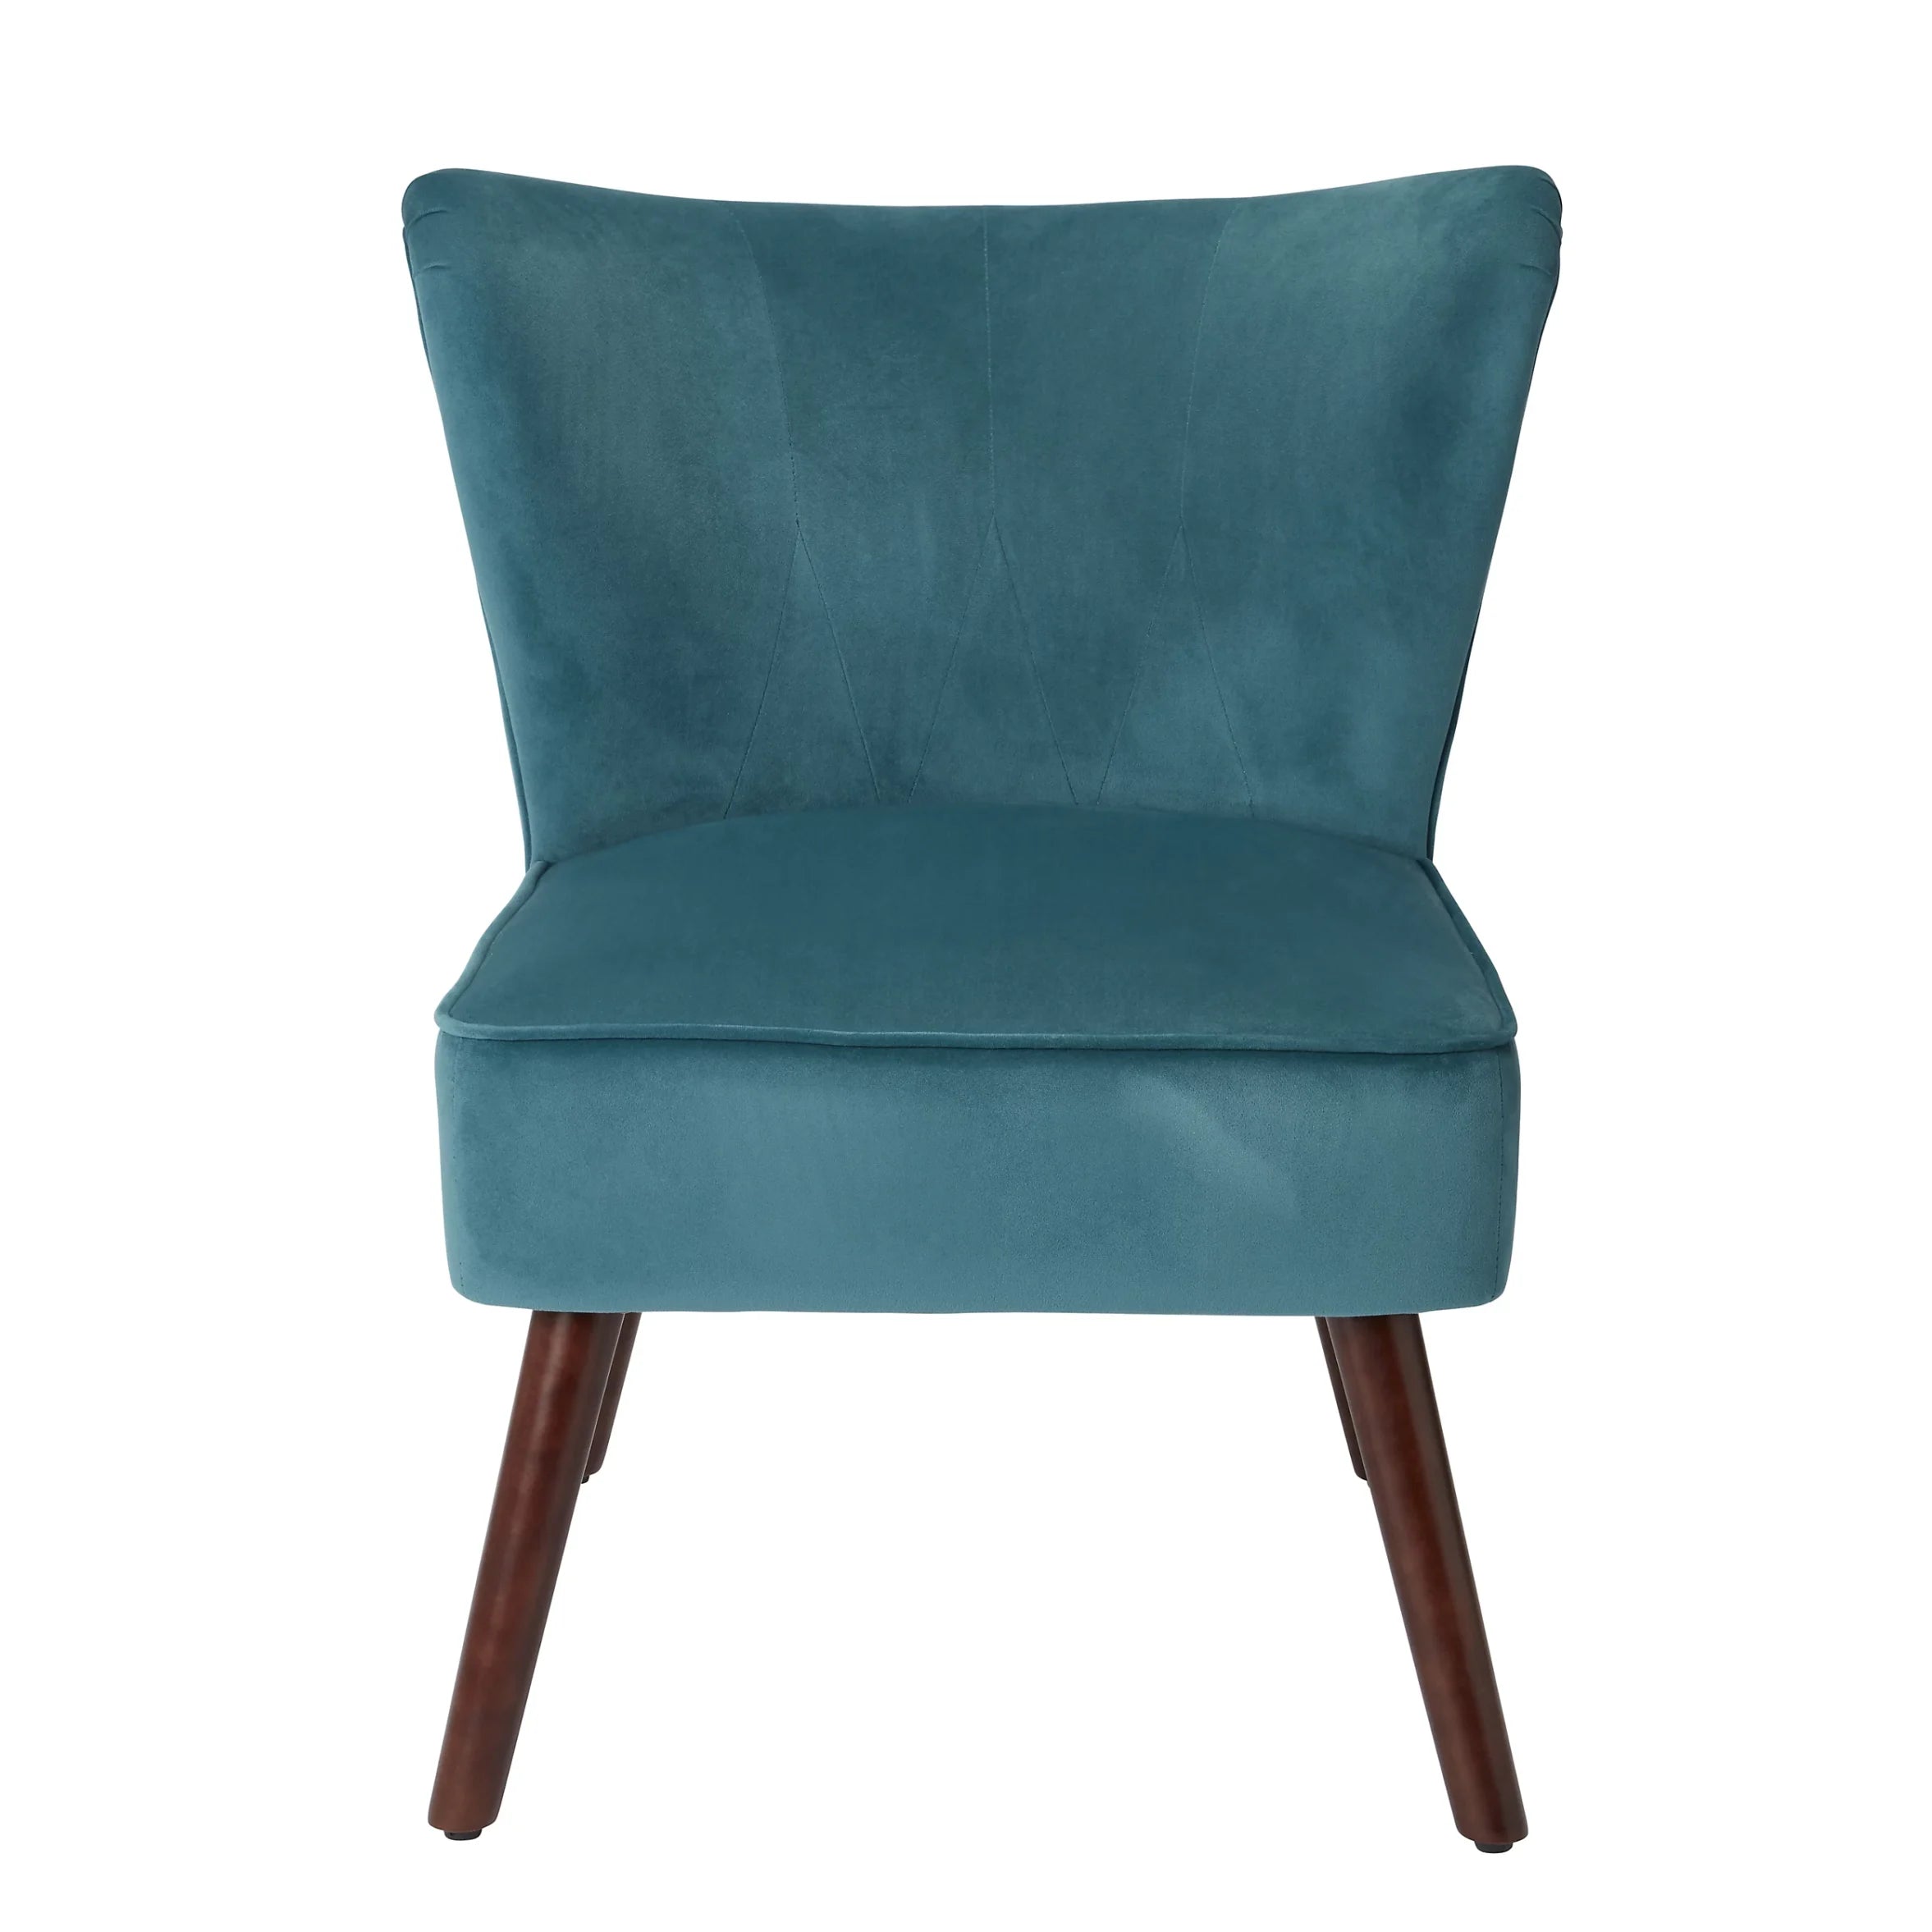 Zorita Teal Velvet effect Occasional chair (H)830mm (W)650mm (D)715mm -0891